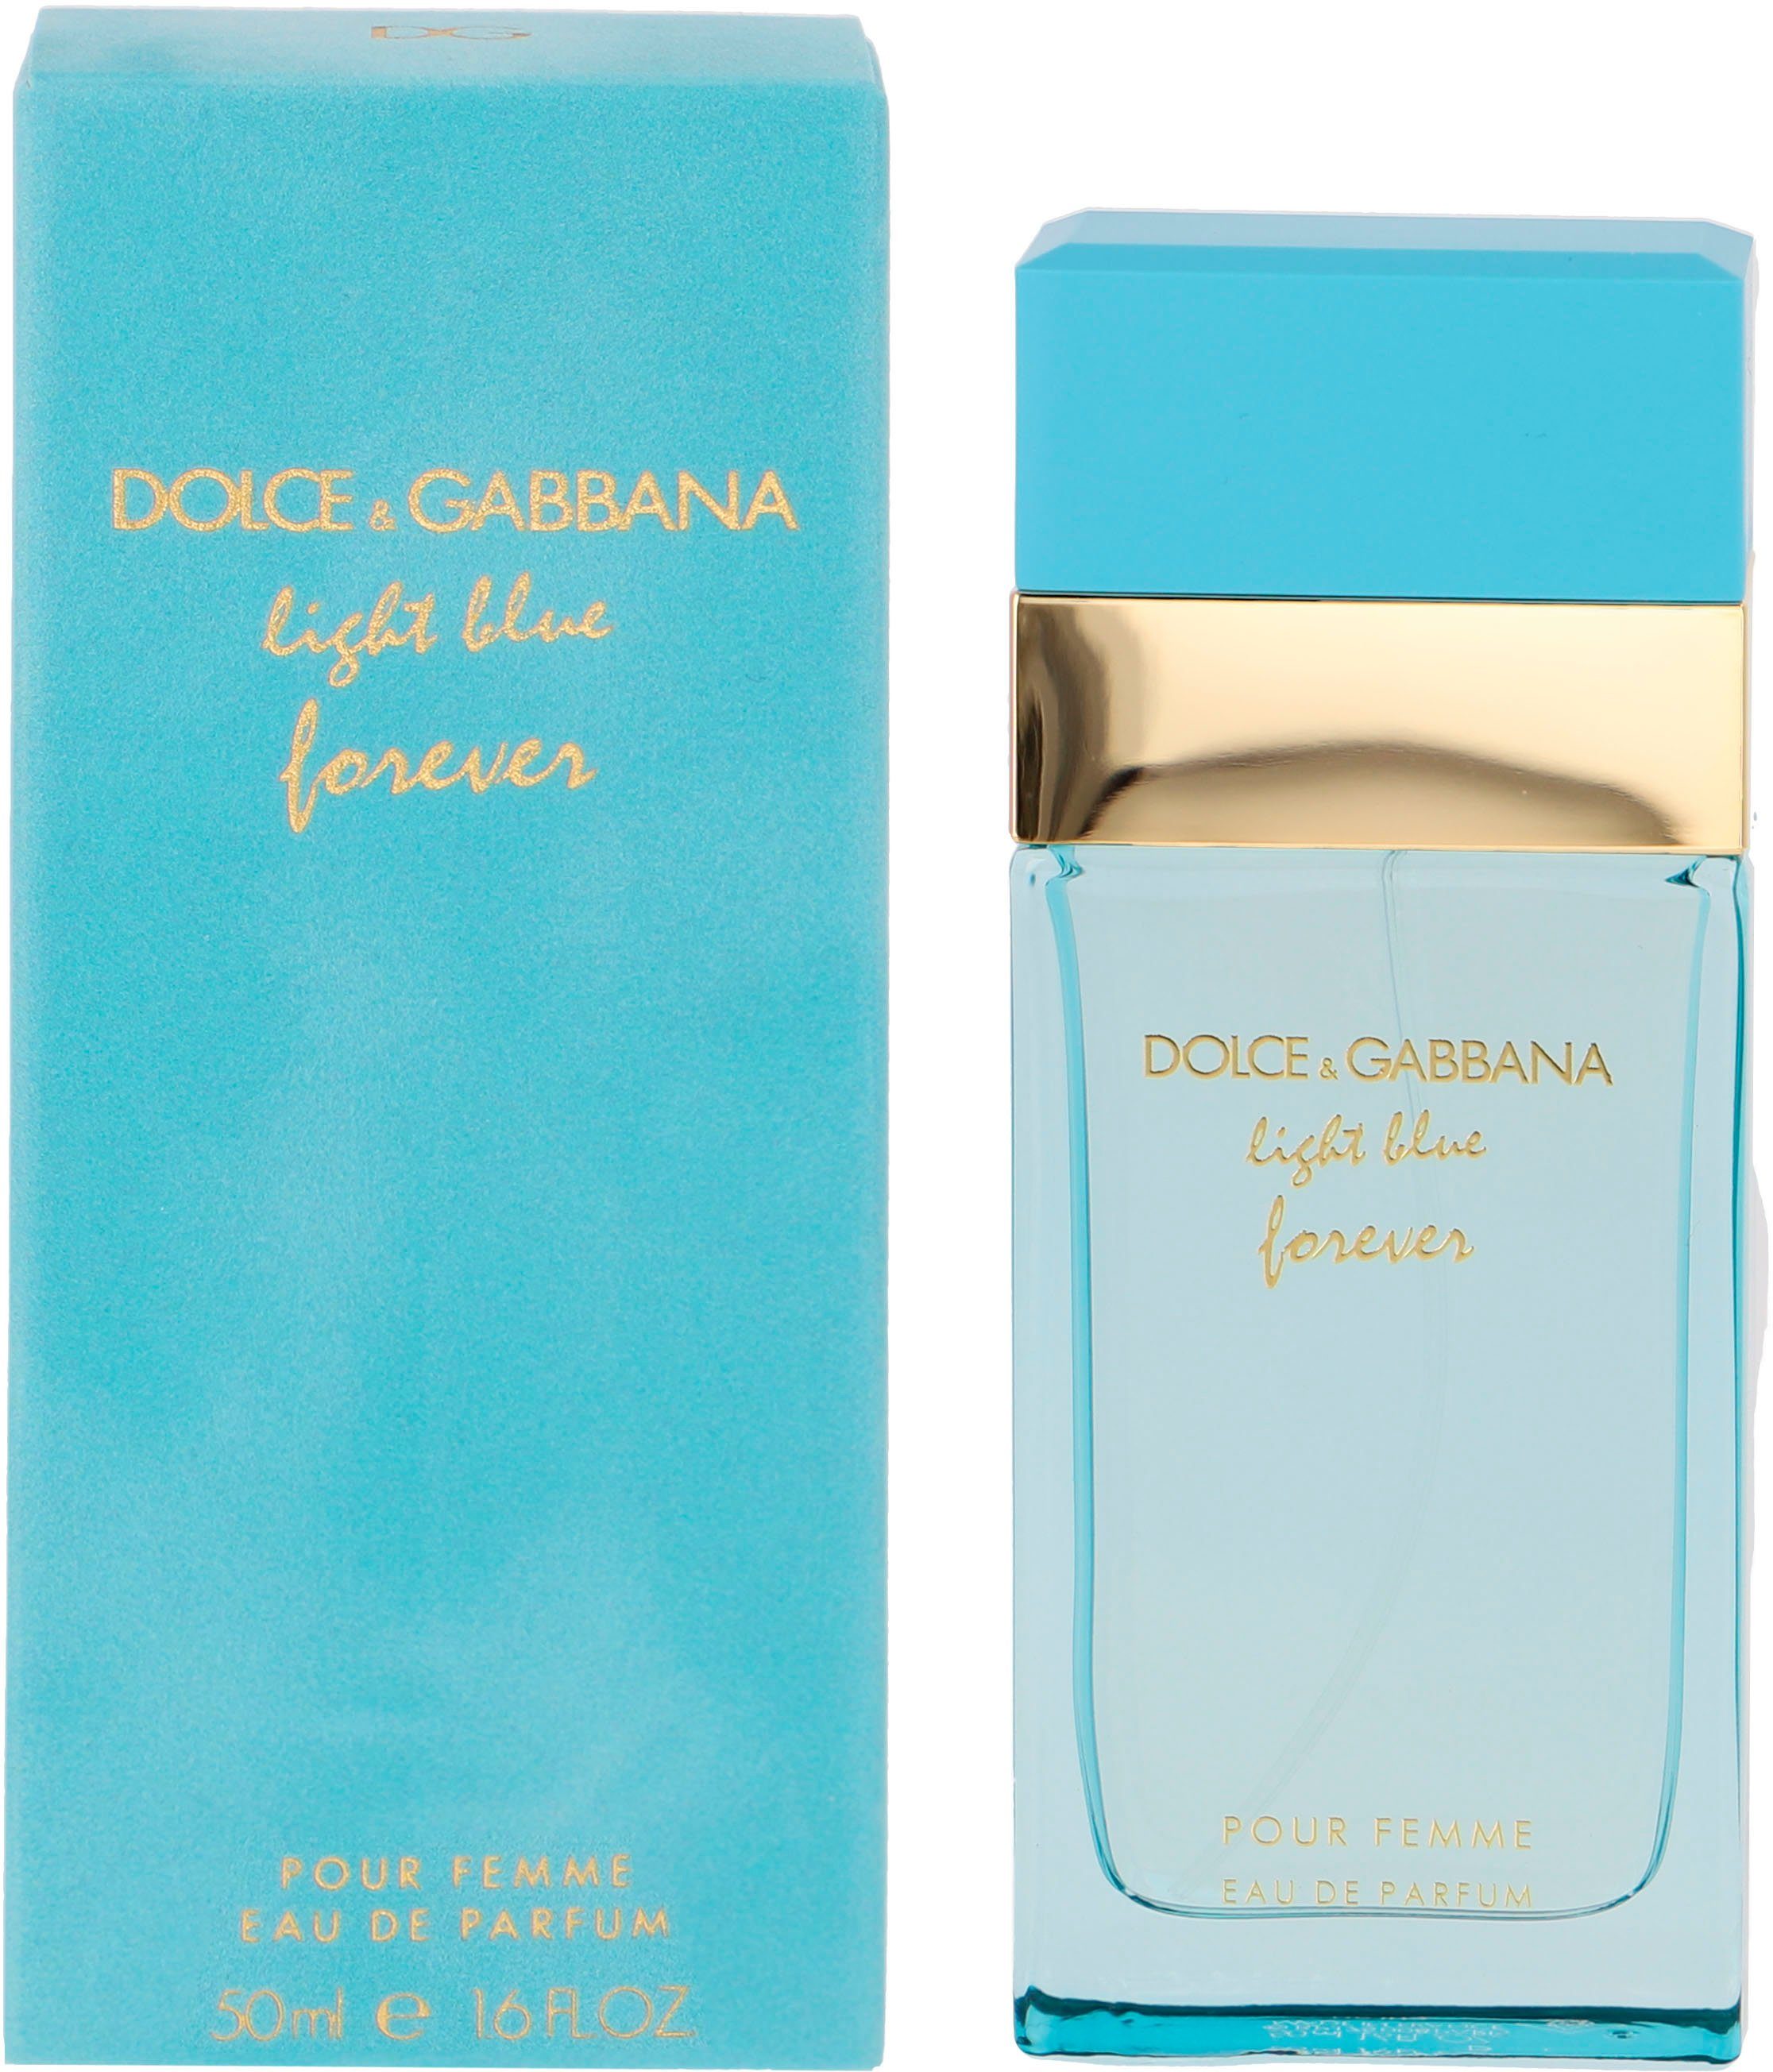 DOLCE & GABBANA Eau Parfum Blue Light de Forever